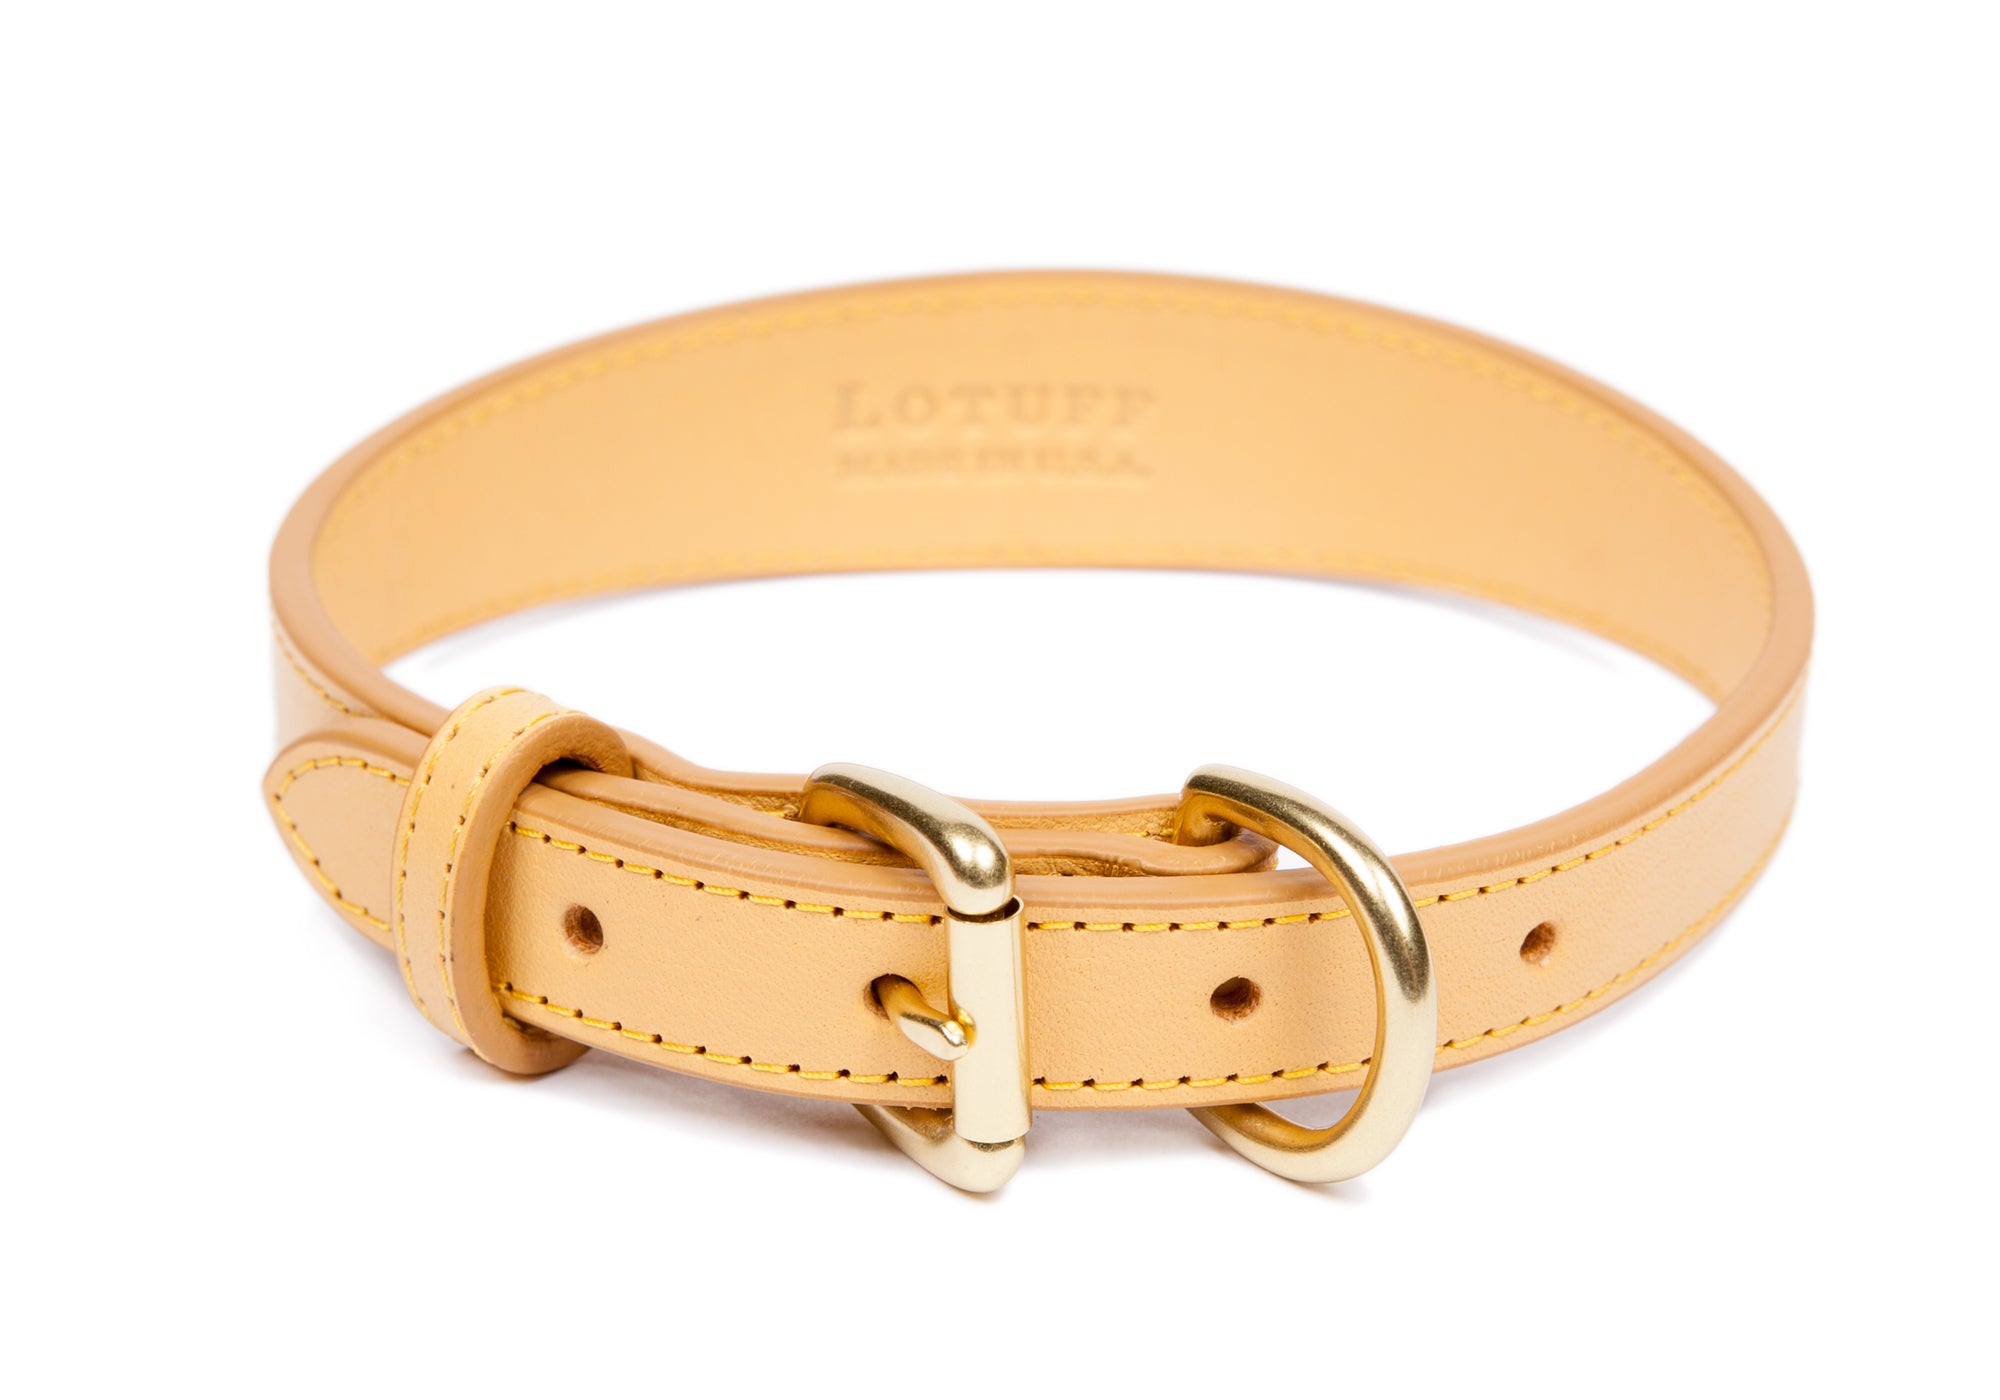 LV Leather Collar – Castellar collars